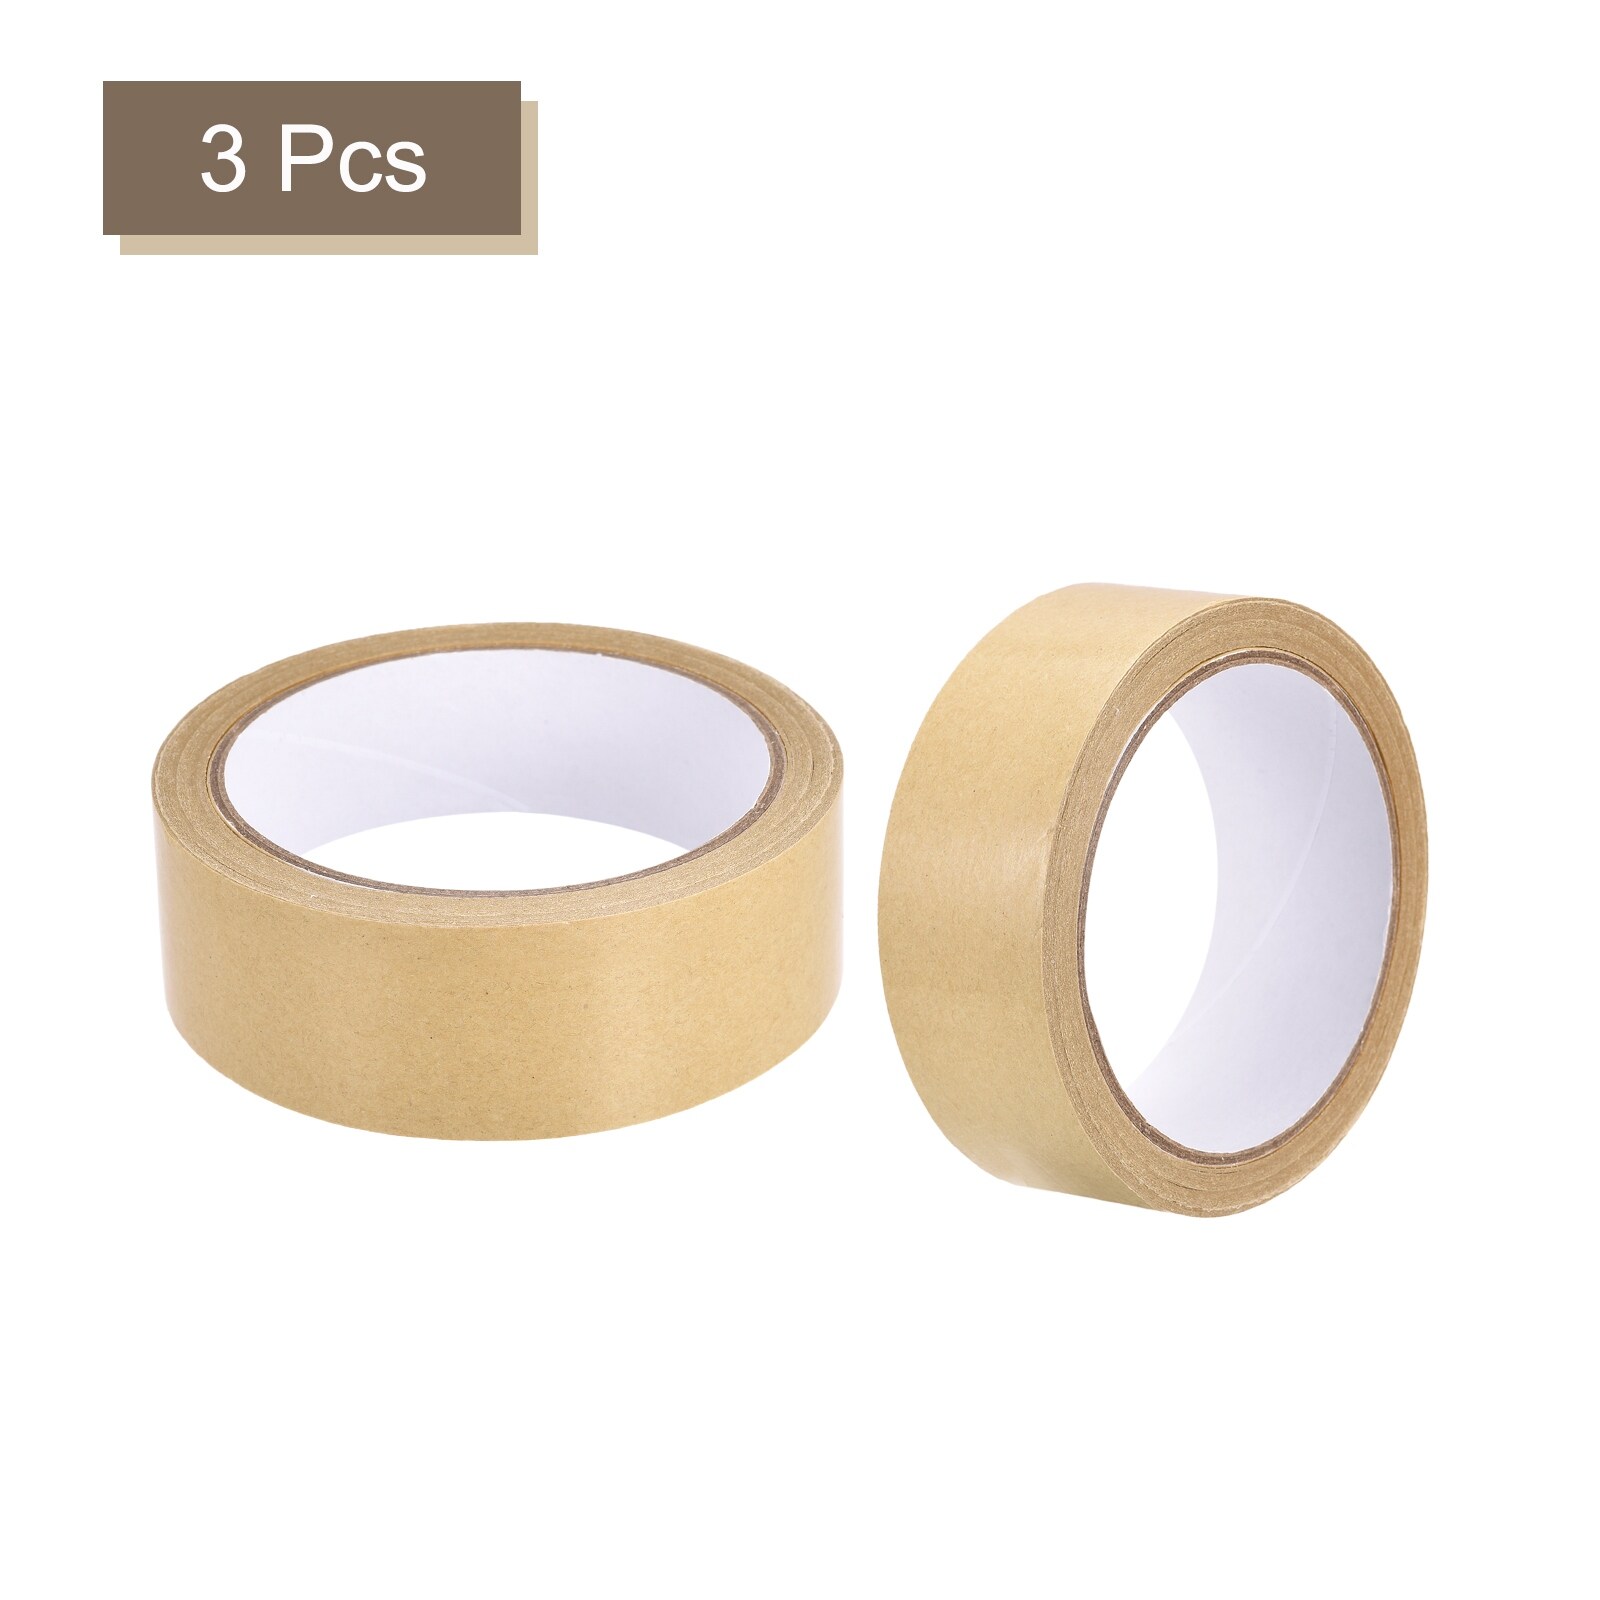 Glitter Tape, Decorative Craft Tape Self Adhesive Stick 1.5cmx10m Gold Tone  3Pcs